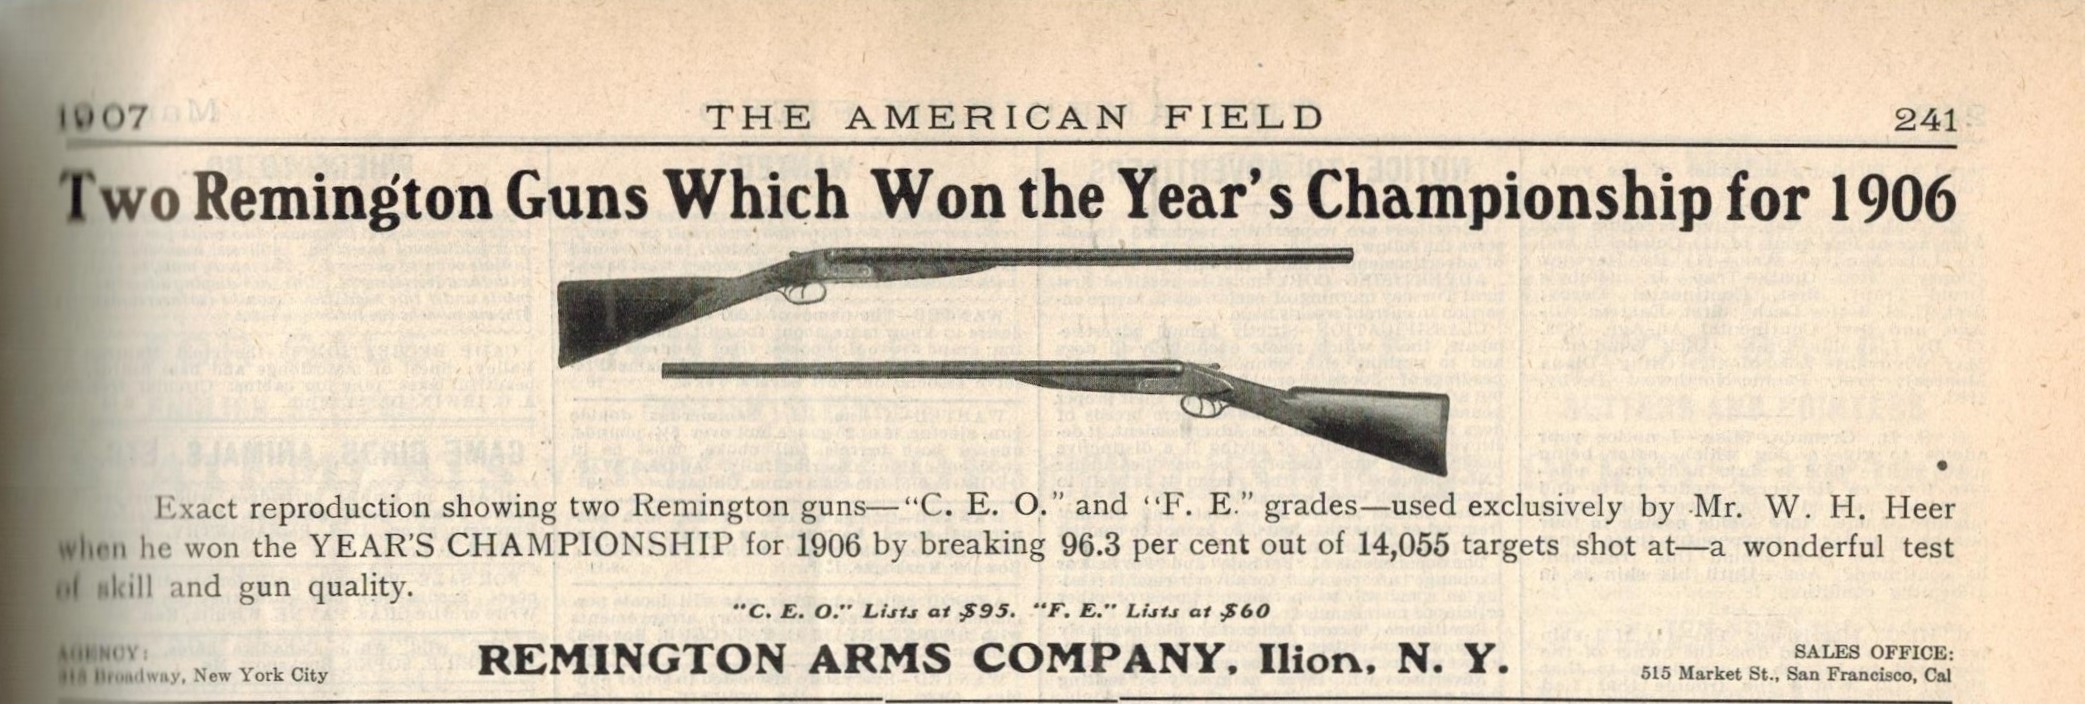 The American Field, March 9, 1907, Billy Heer's Guns.jpeg